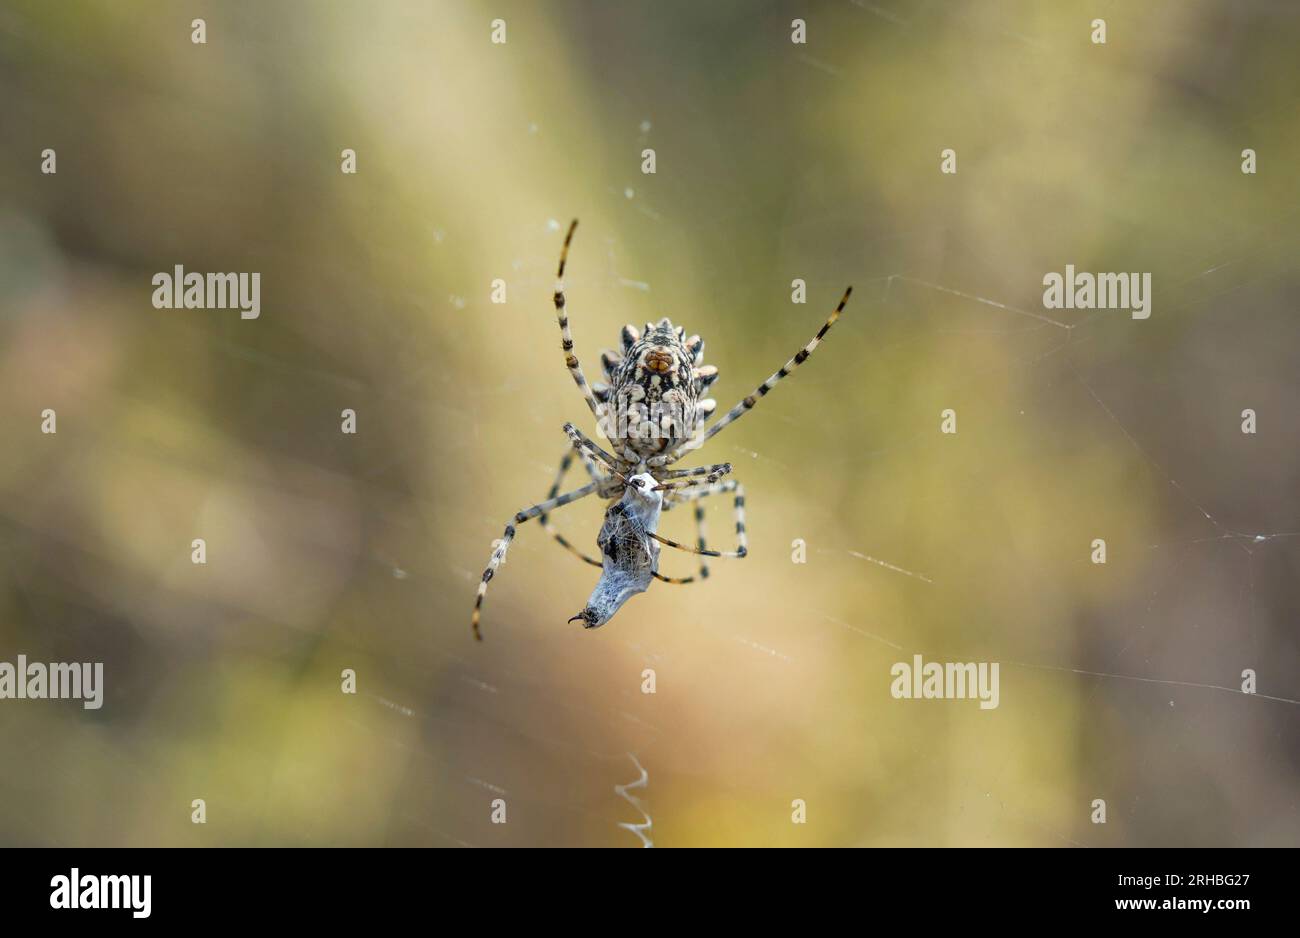 Lobed Argiope, Argiope lobata spider in web, female ballooning a prey. Spain. Stock Photo